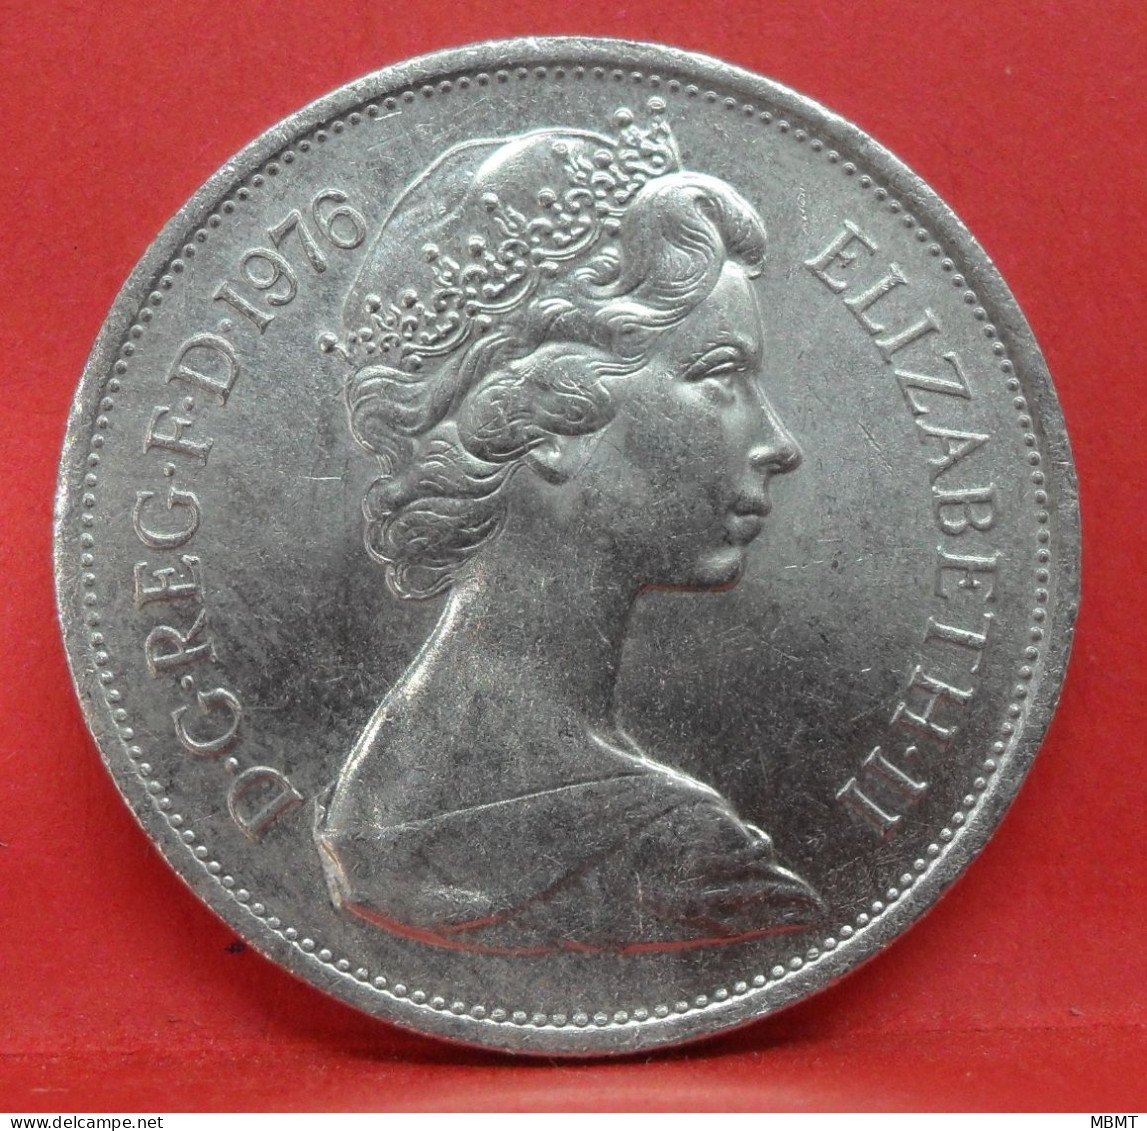 10 Pence 1976 - SUP - Pièce Monnaie Grande-Bretagne - Article N°2823 - 10 Pence & 10 New Pence